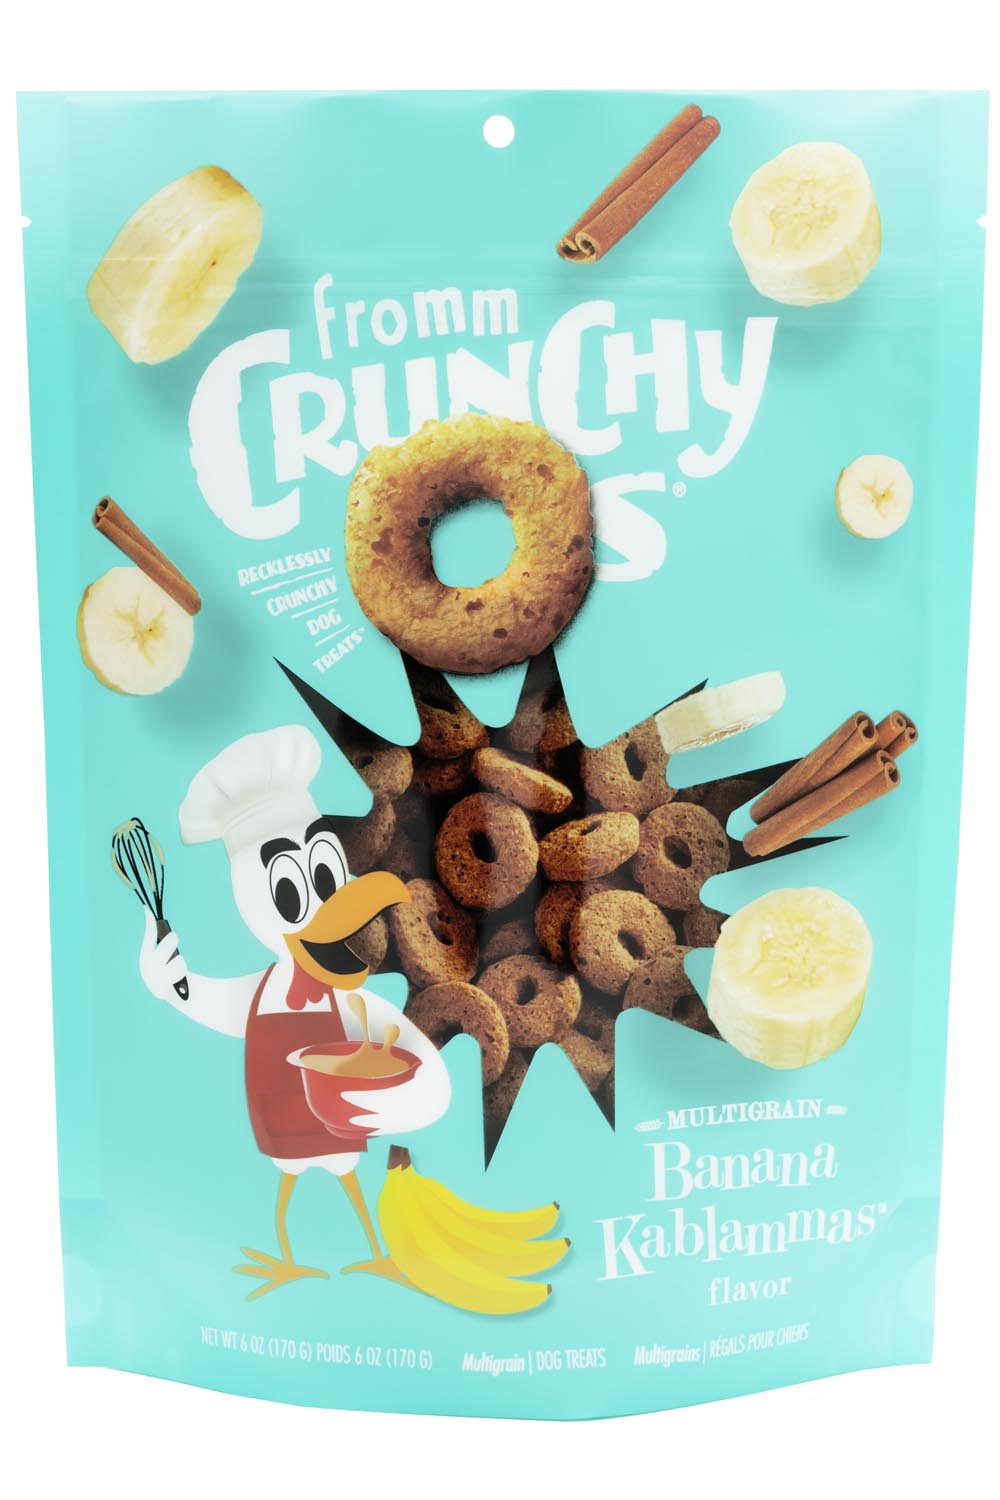 Fromm Crunchy Os Banana Kablammas®